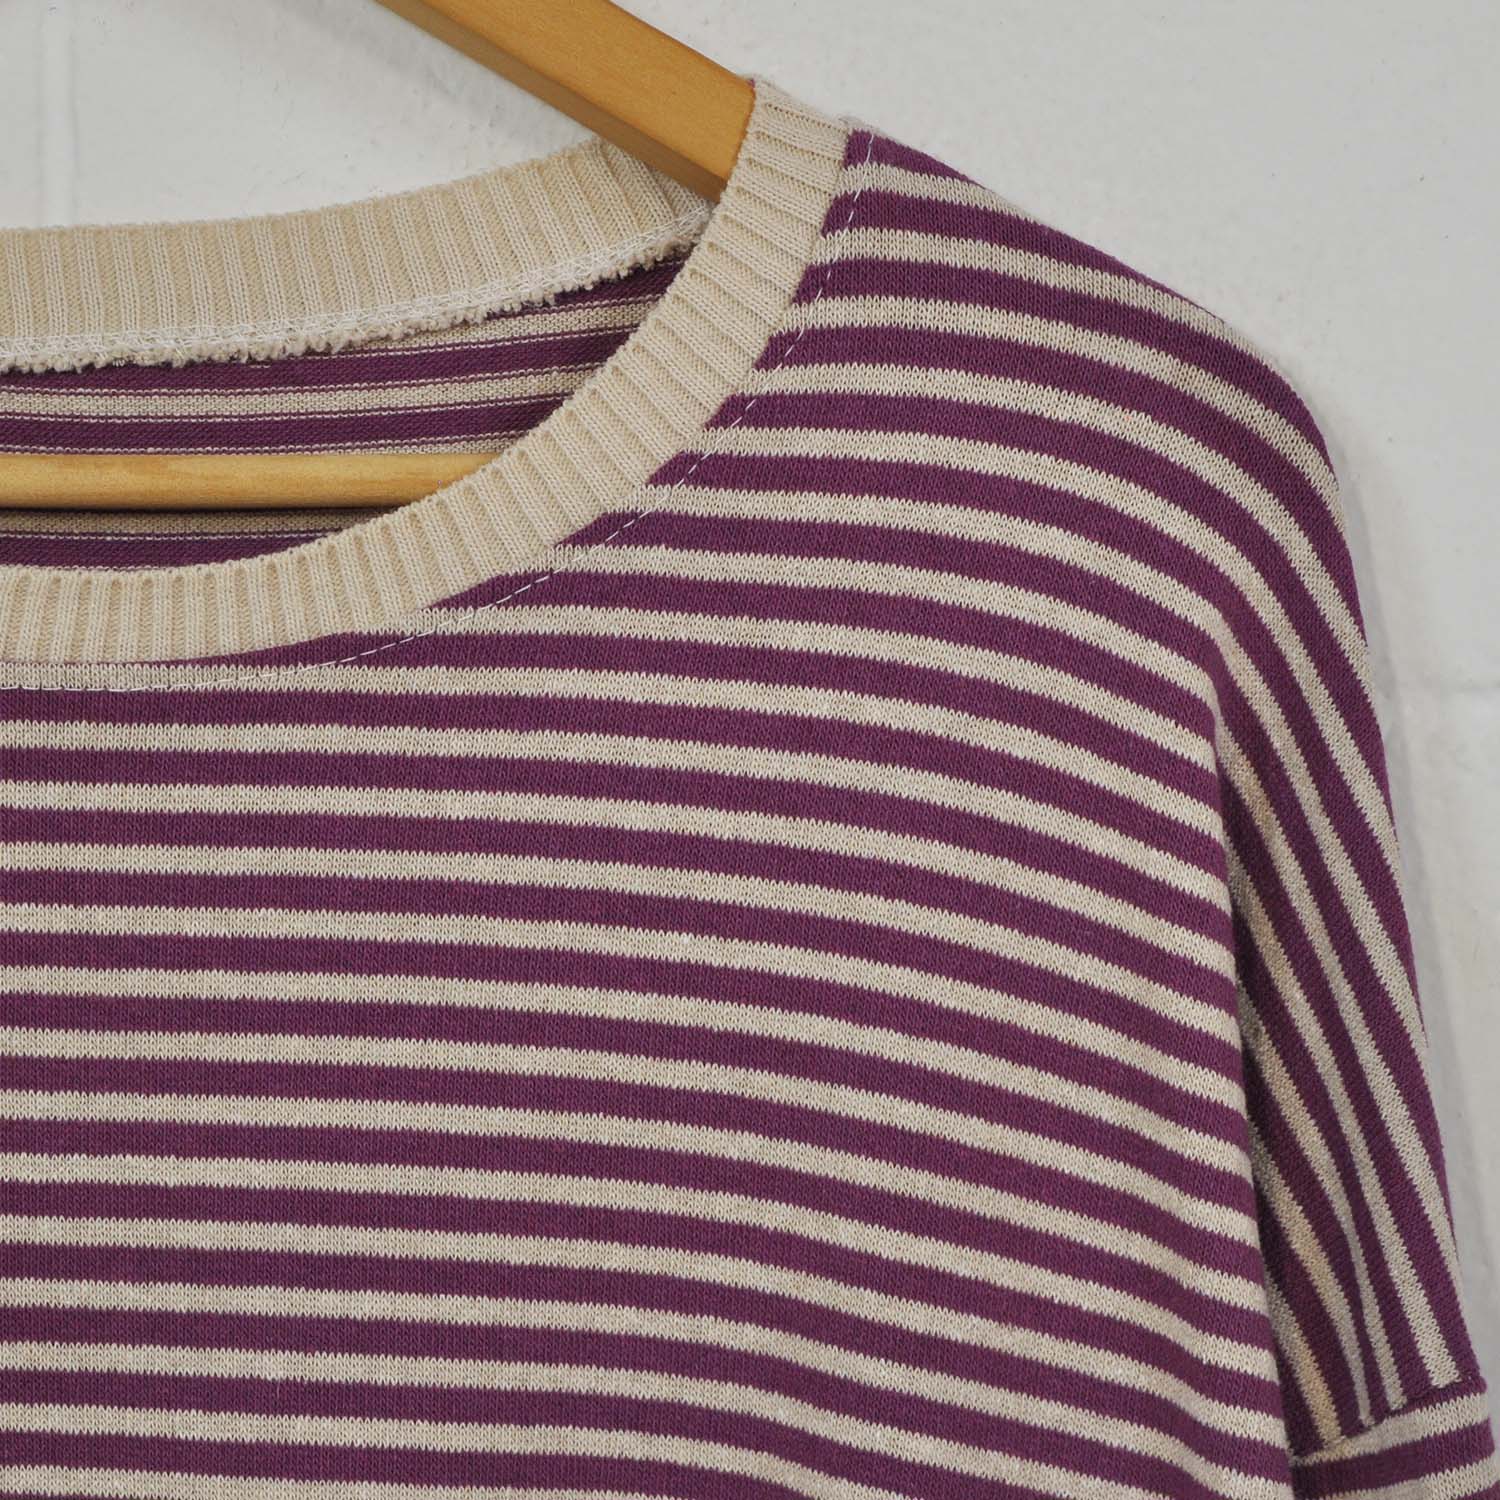 Purple cotton stripes sweater 